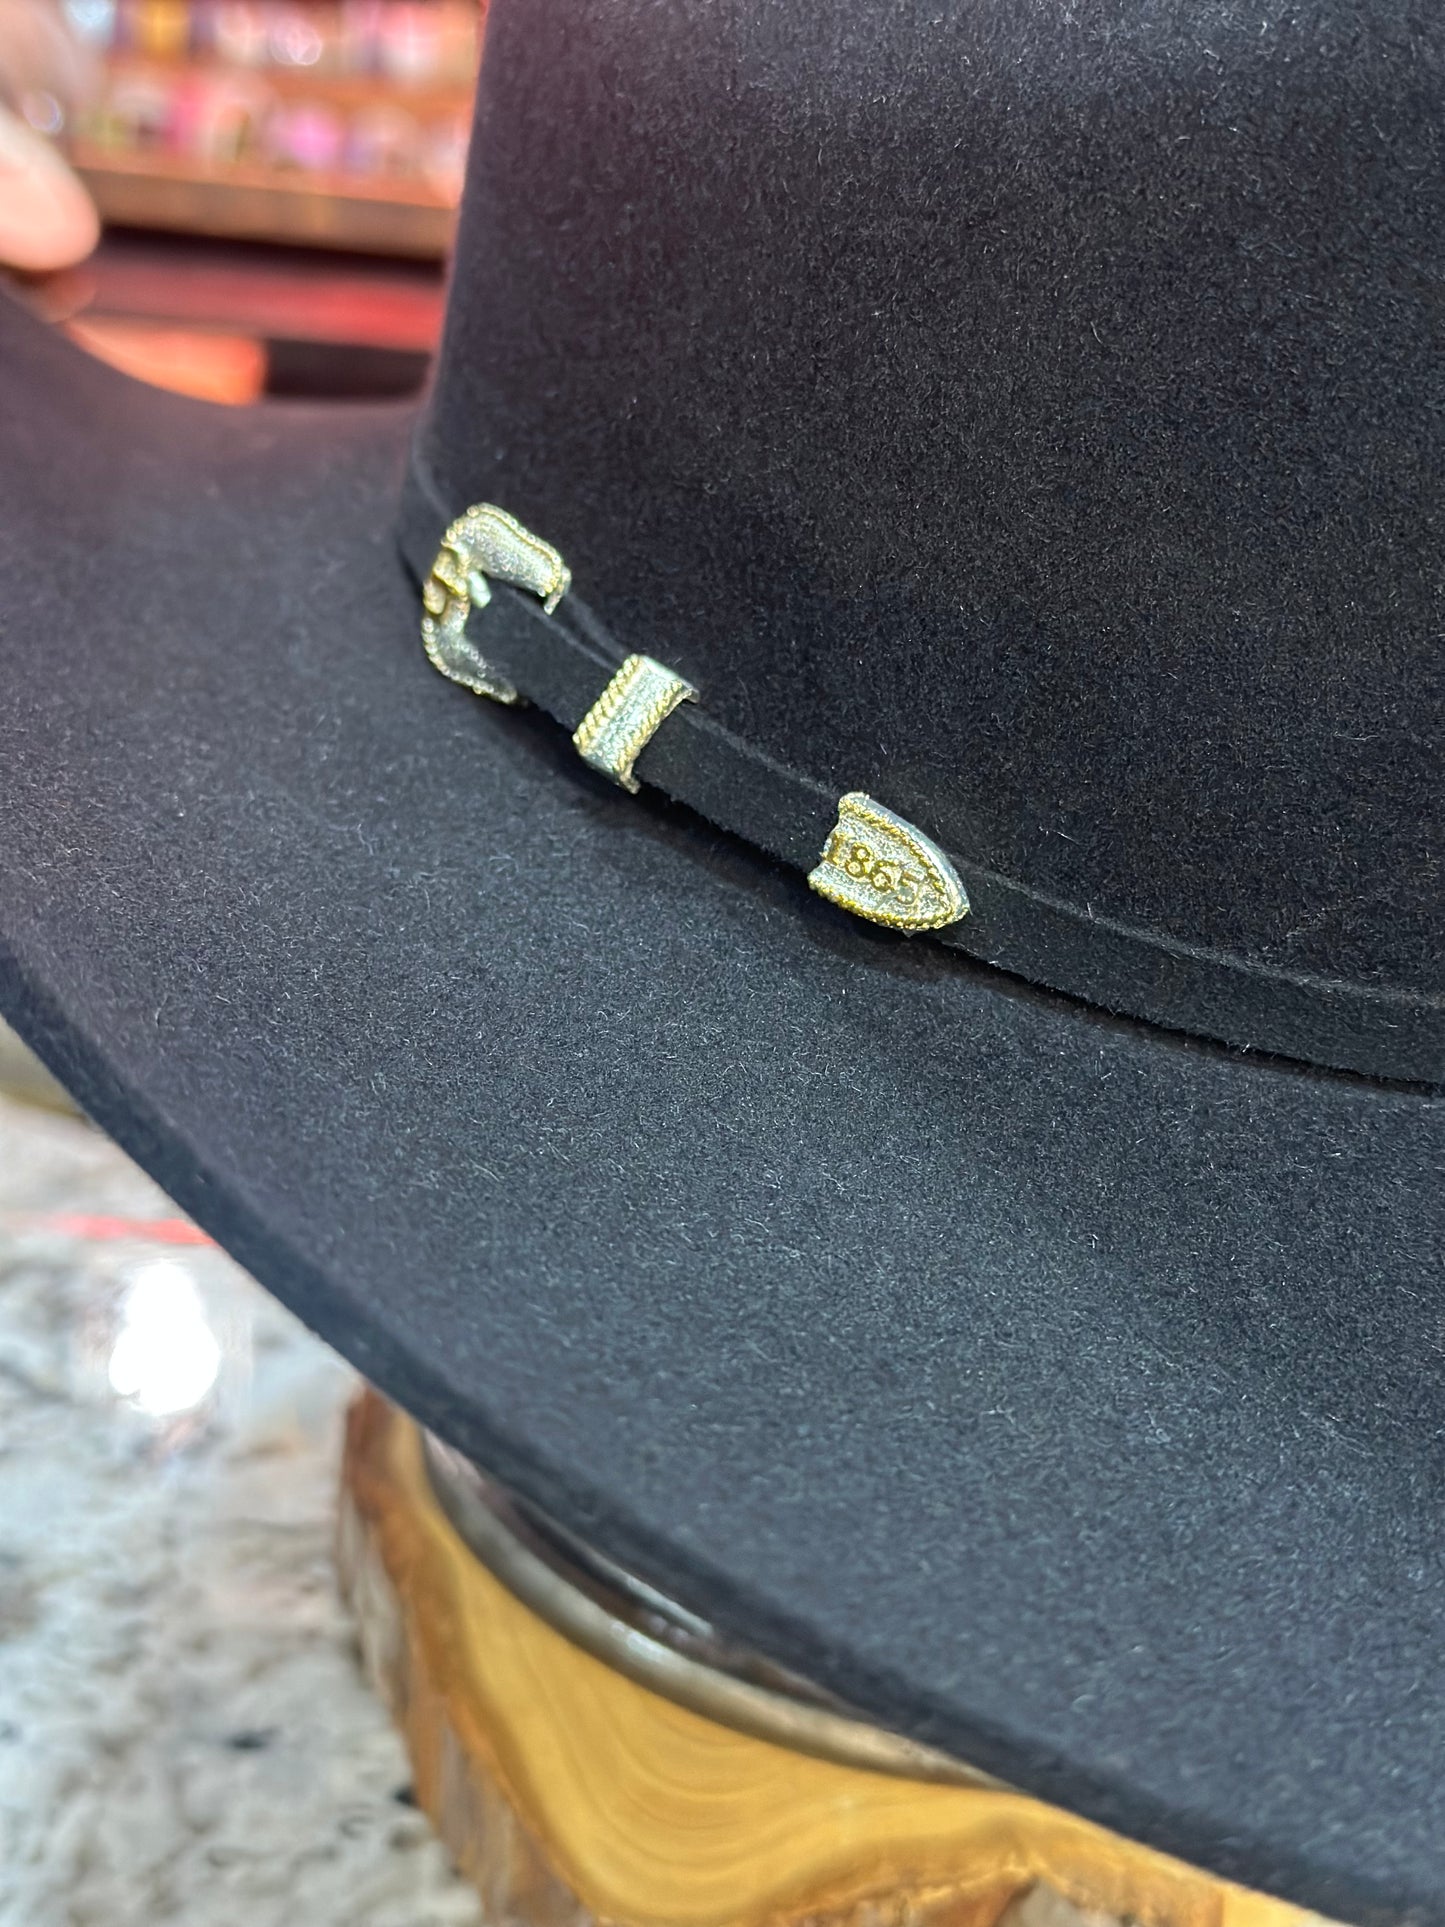 Stetson 6x Adelante Felt Cowboy Hat Black